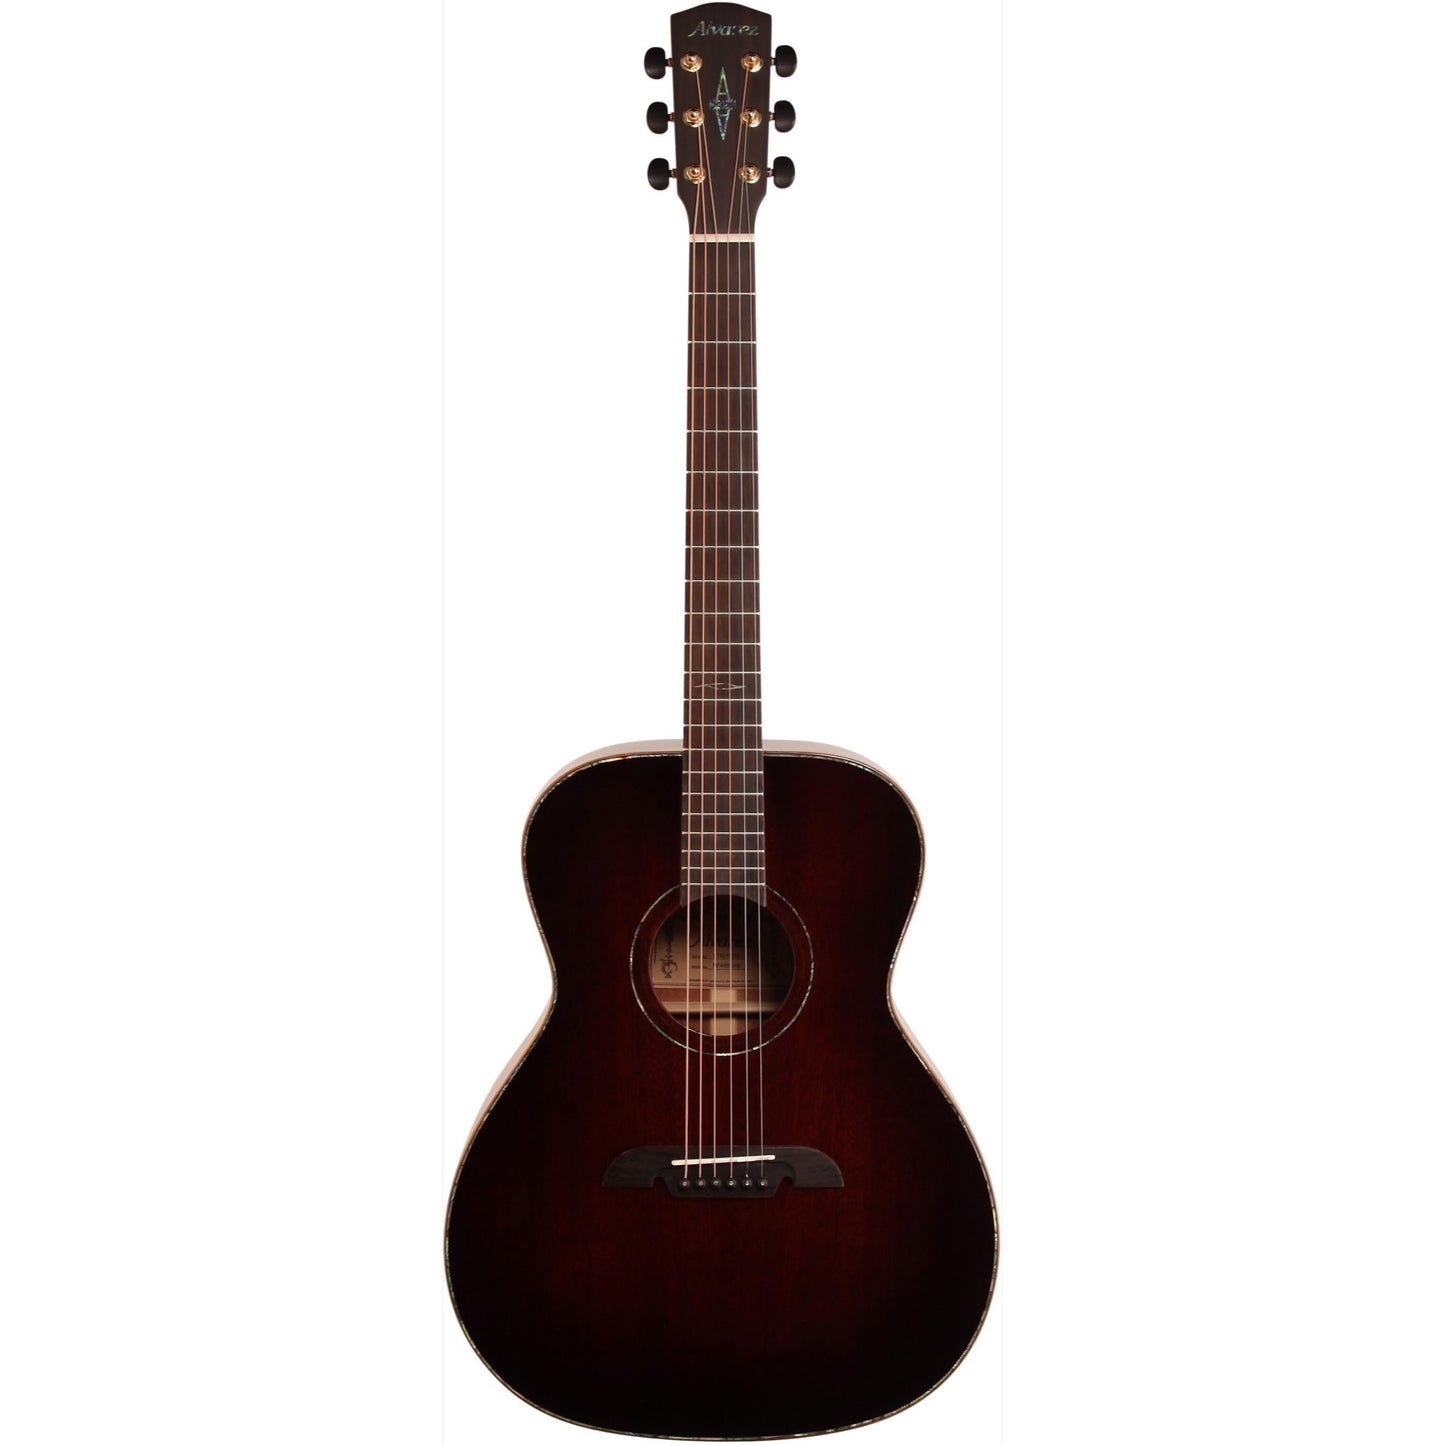 Alvarez MFA66SHB Masterworks Folk Acoustic Guitar (with Case), Sunburst